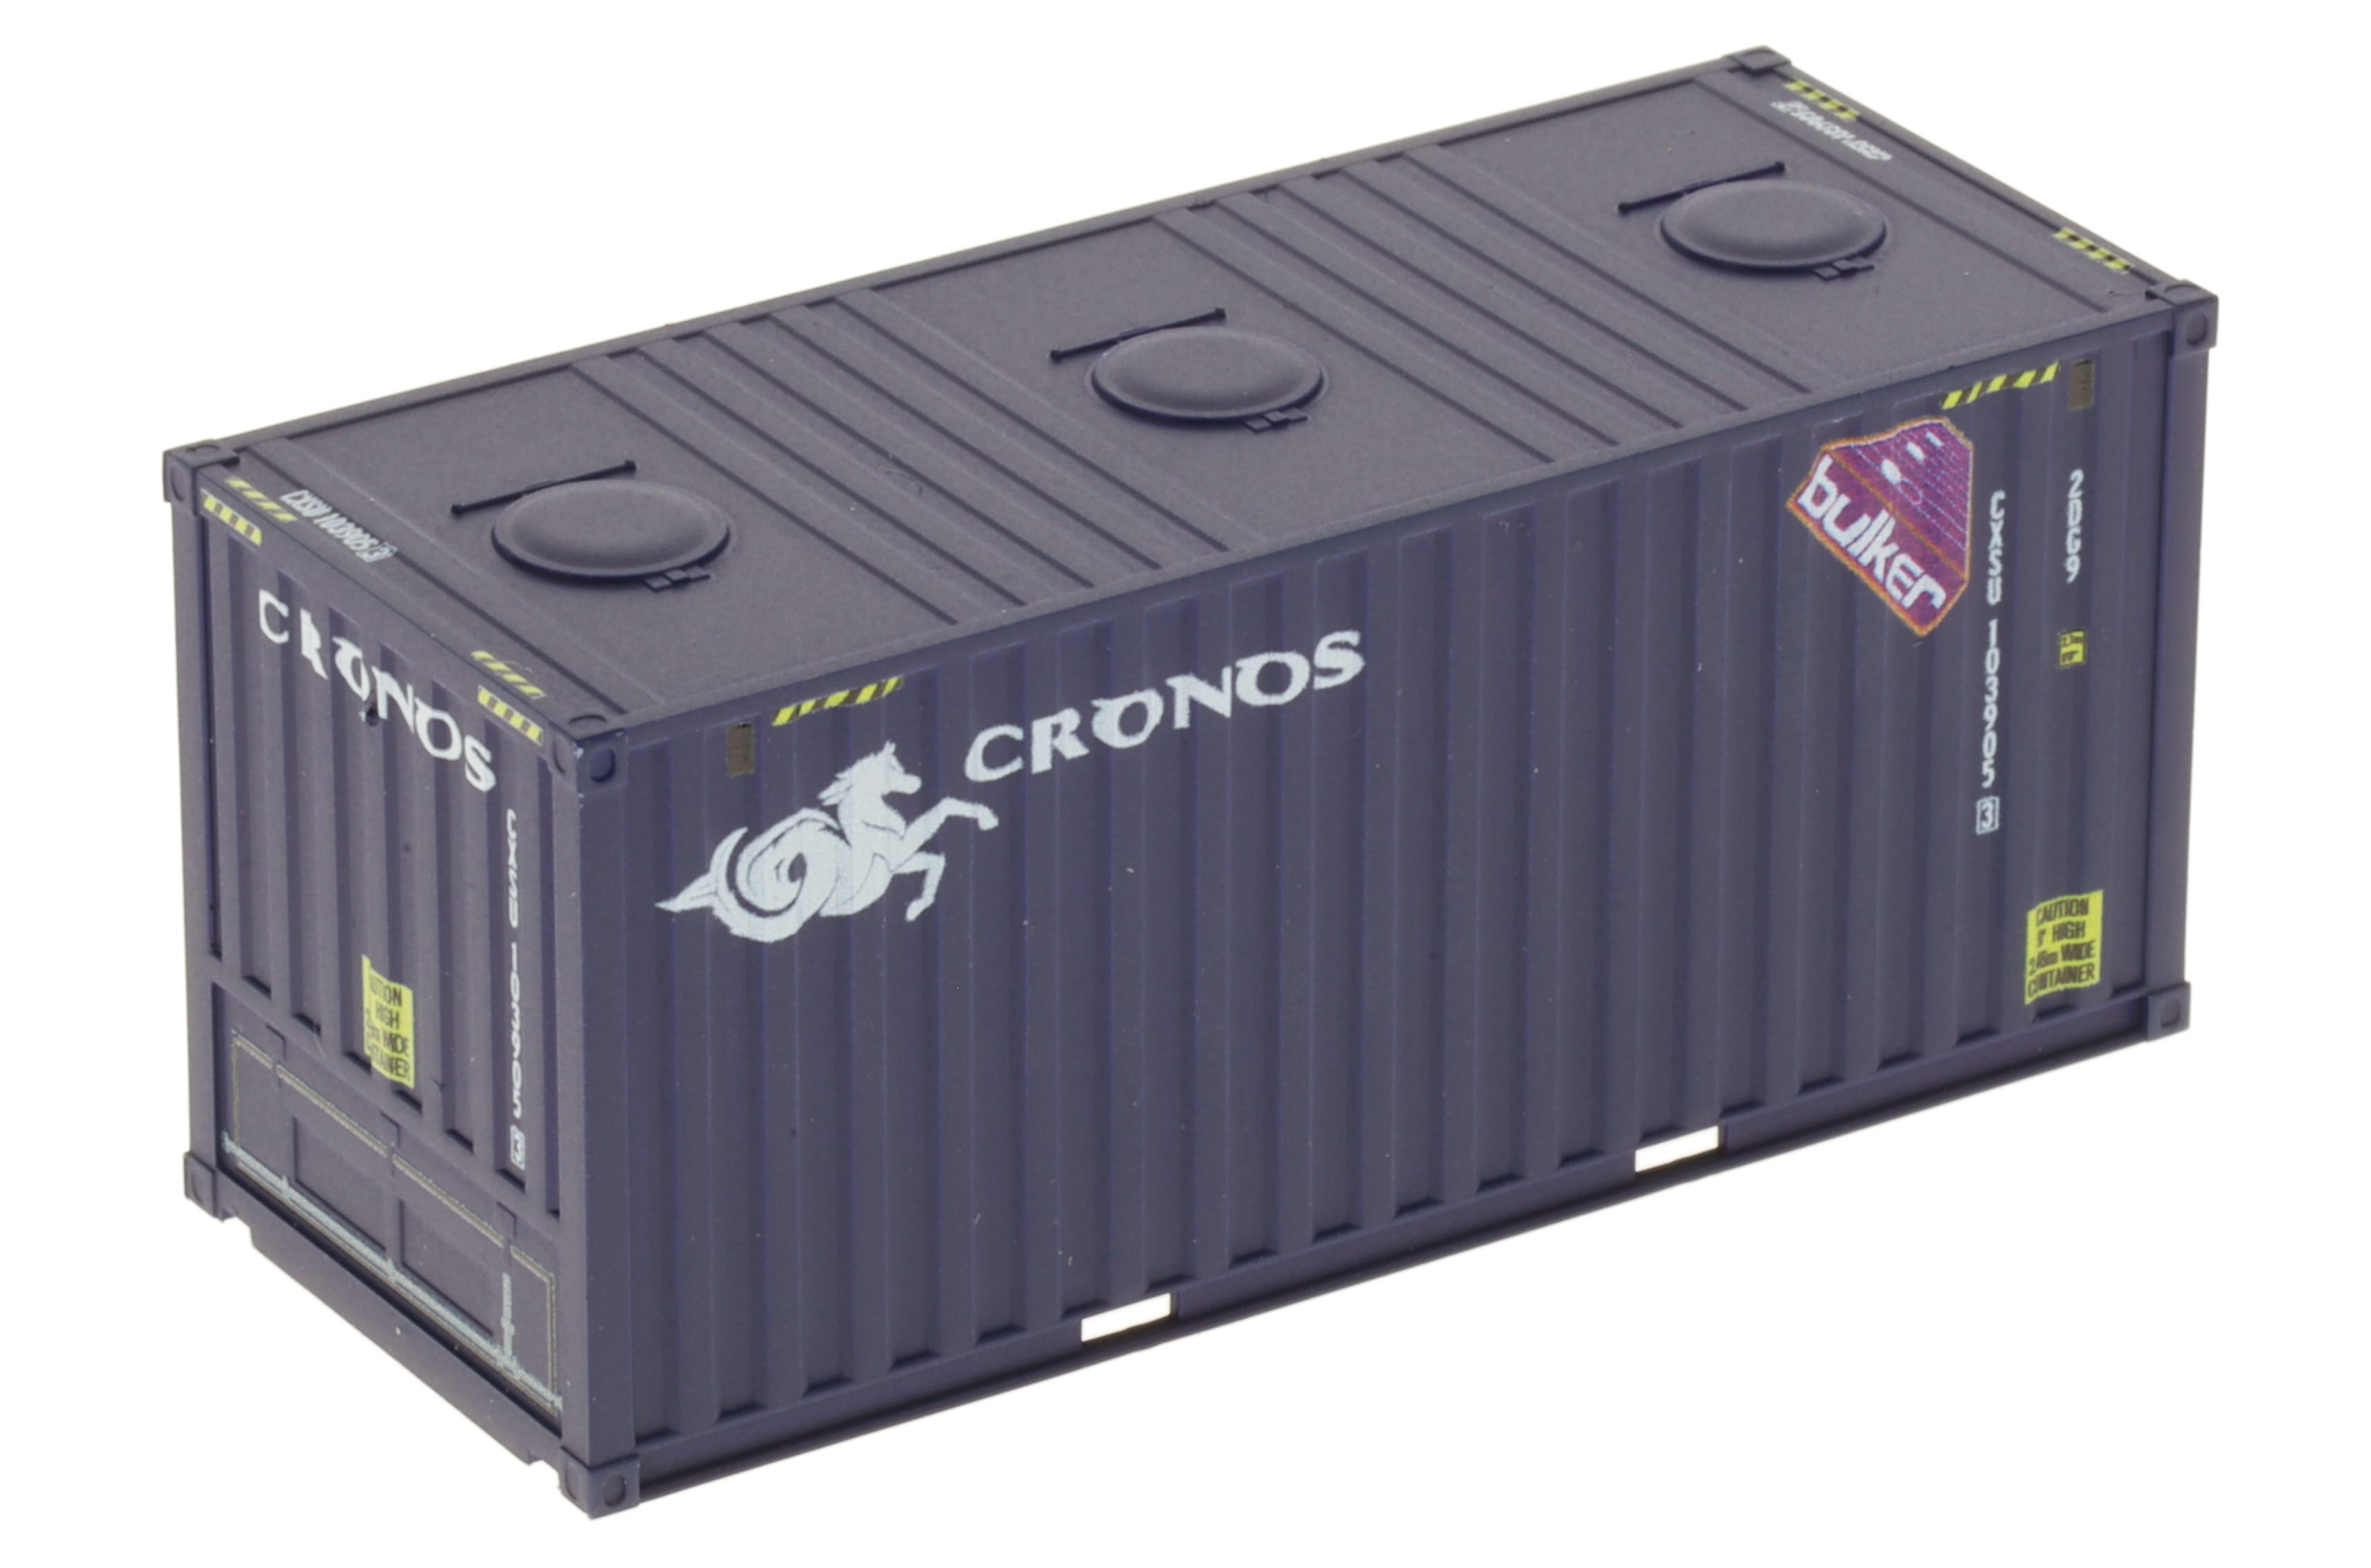 1:87 20´Bulk-Container Cronos blau, Behälternummer: CXSU 103905